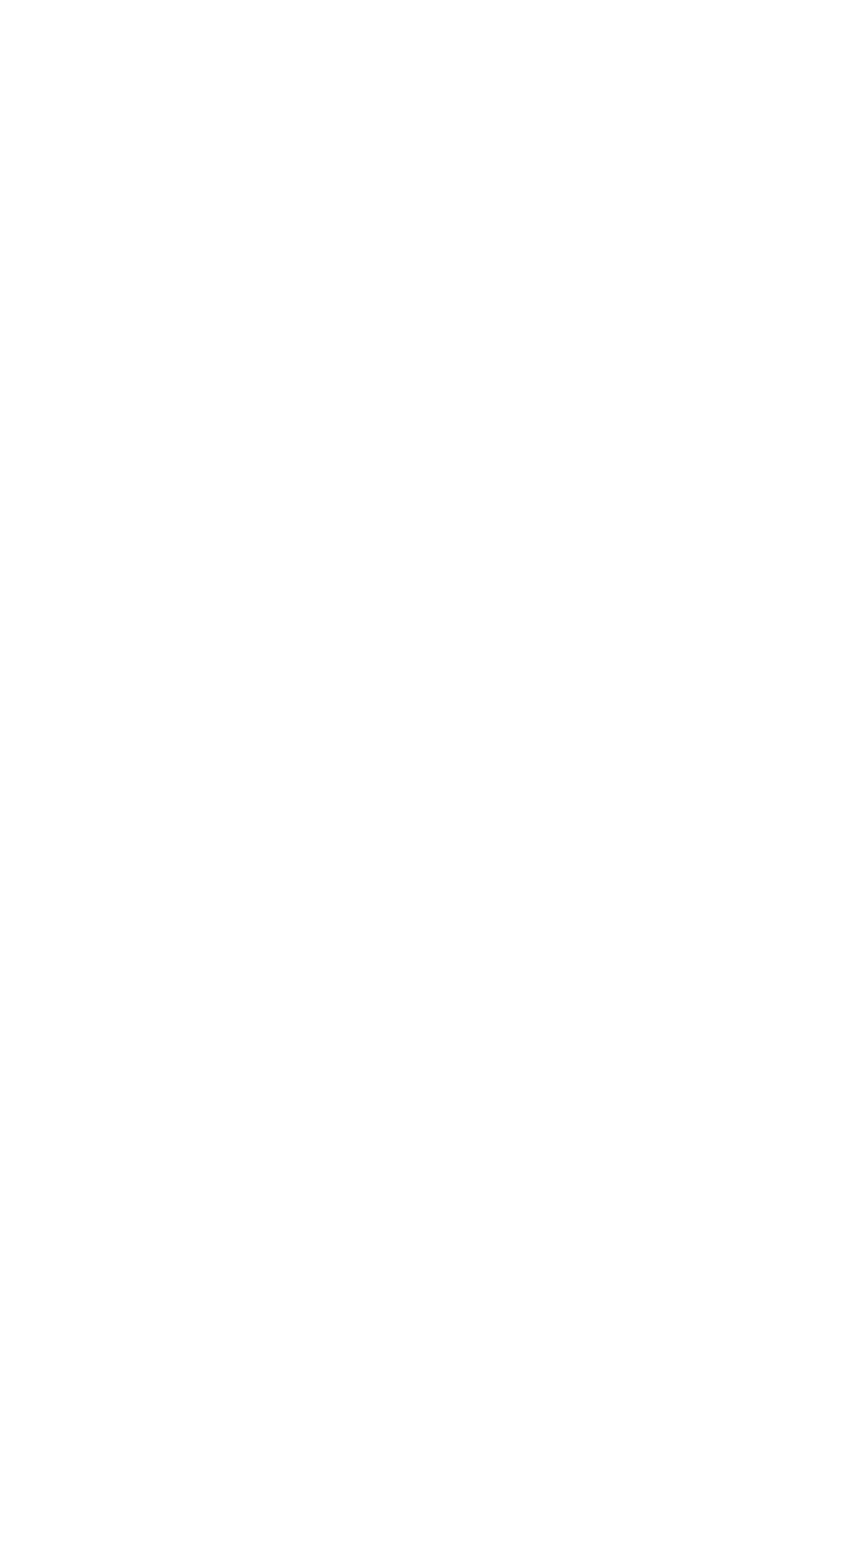 Kingdom Holding logo pour fonds sombres (PNG transparent)